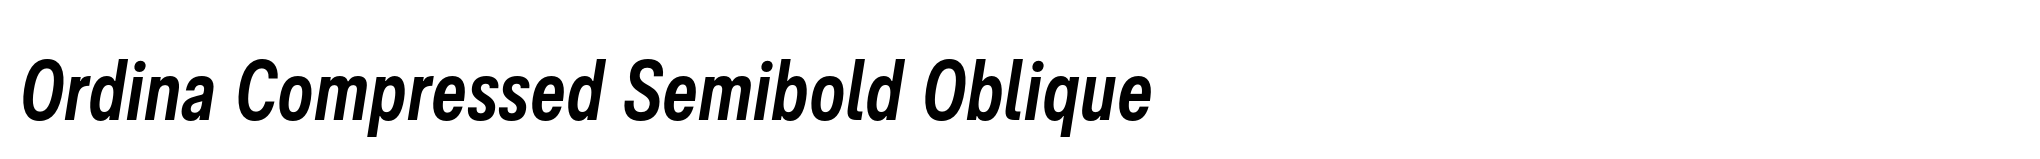 Ordina Compressed Semibold Oblique image